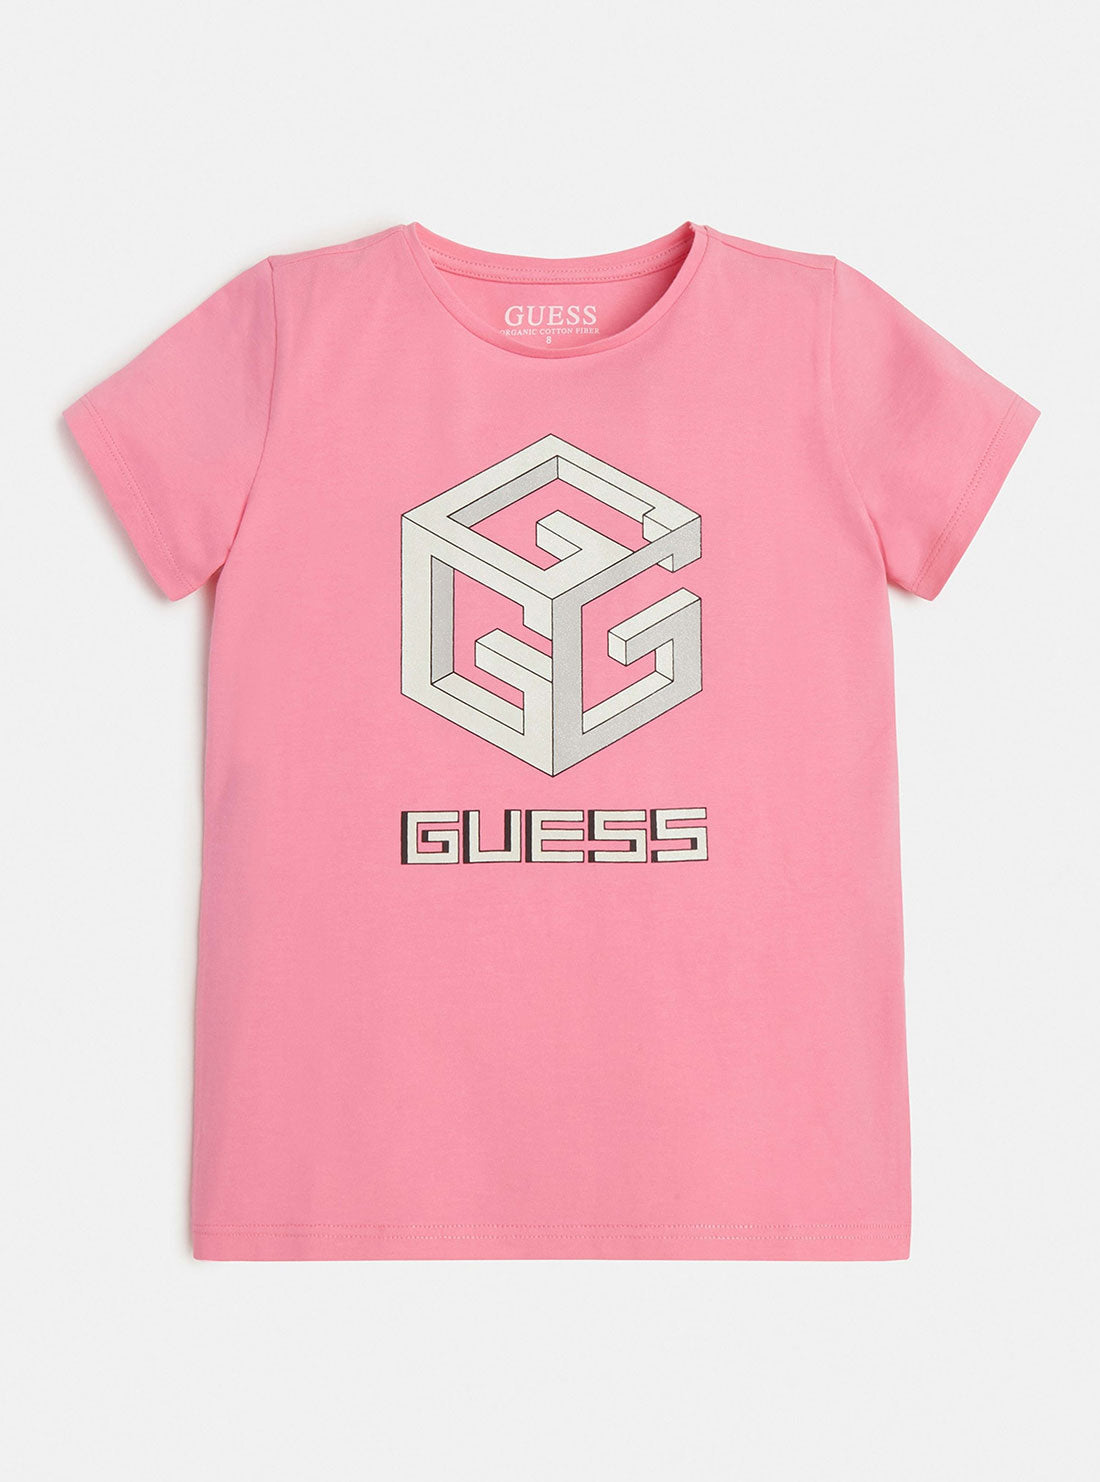 GUESS Big Girl Pink G Cube Logo T-Shirt (7-16) J2BI19J1311 Front View